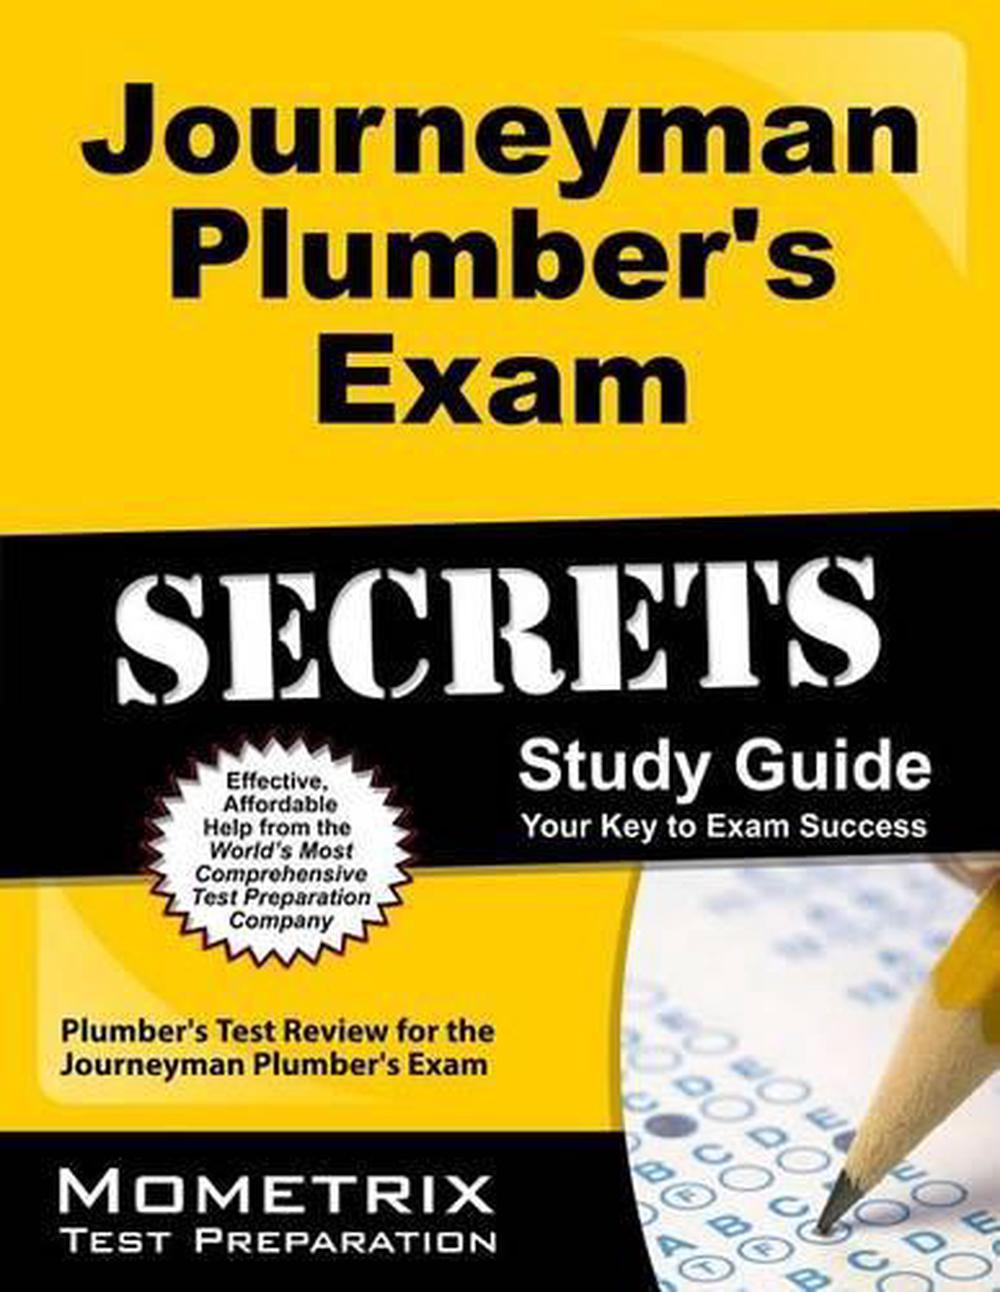 journeyman-plumber-s-exam-secrets-study-guide-plumber-s-test-review-for-the-jo-9781610725699